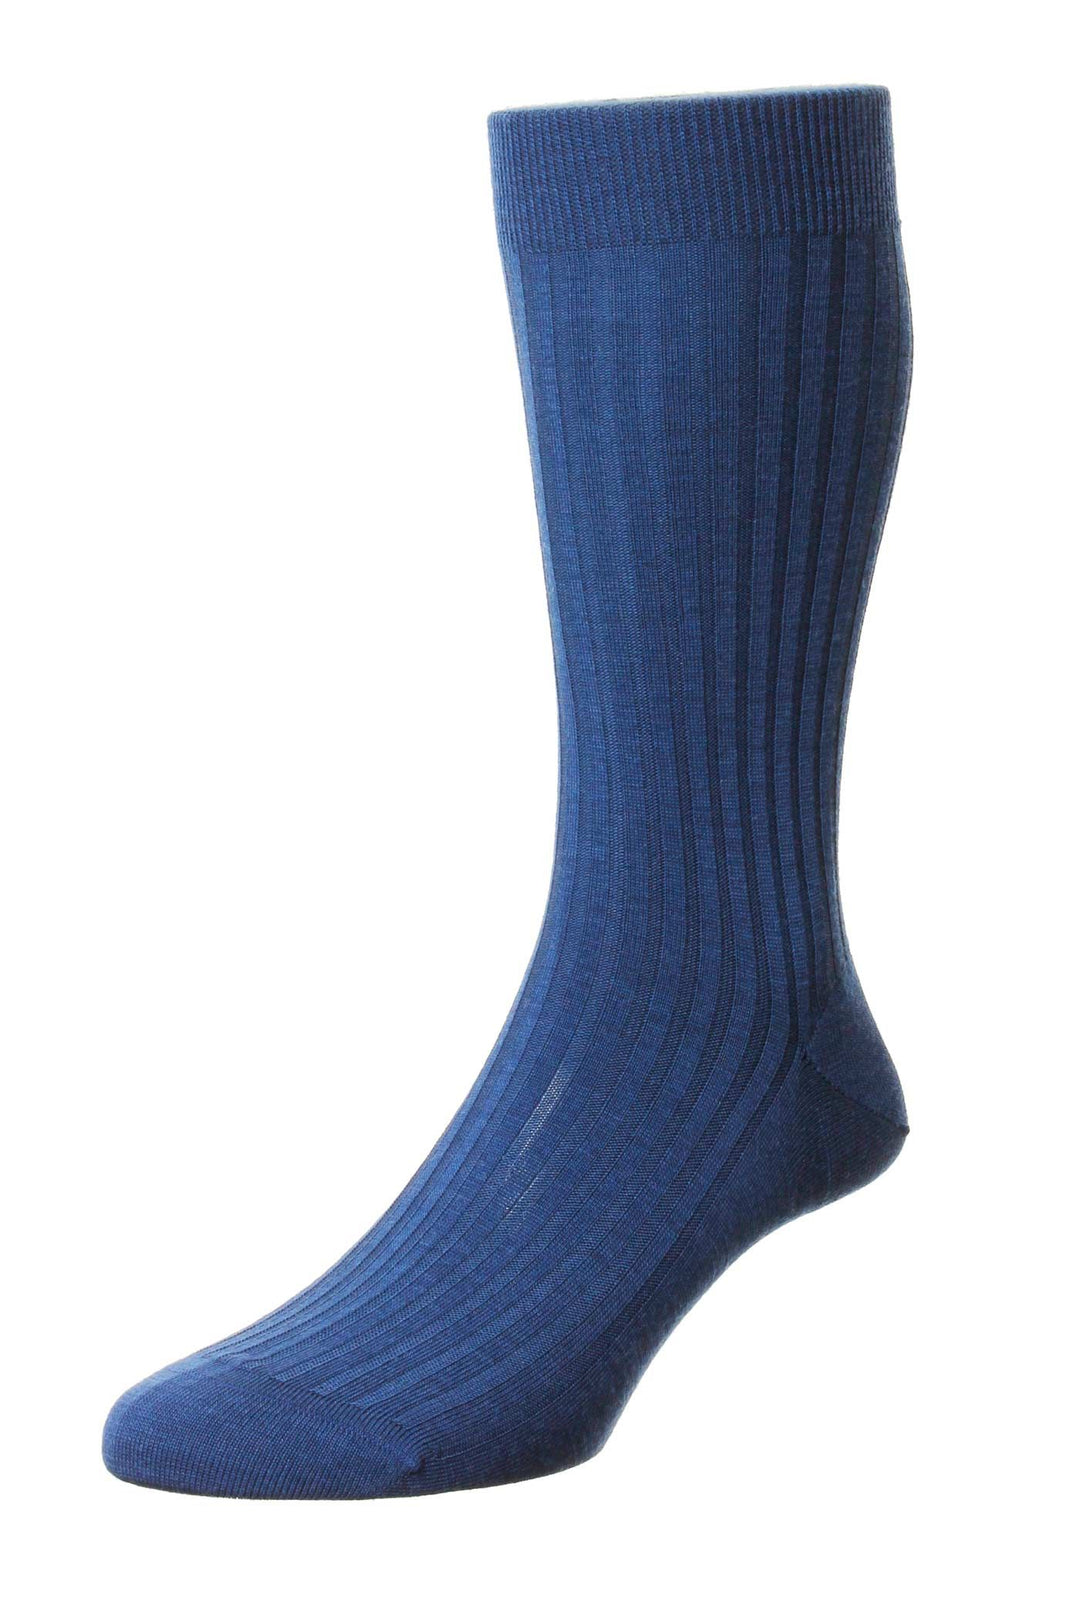 Pantherella Laburnum Merino Wool Sock